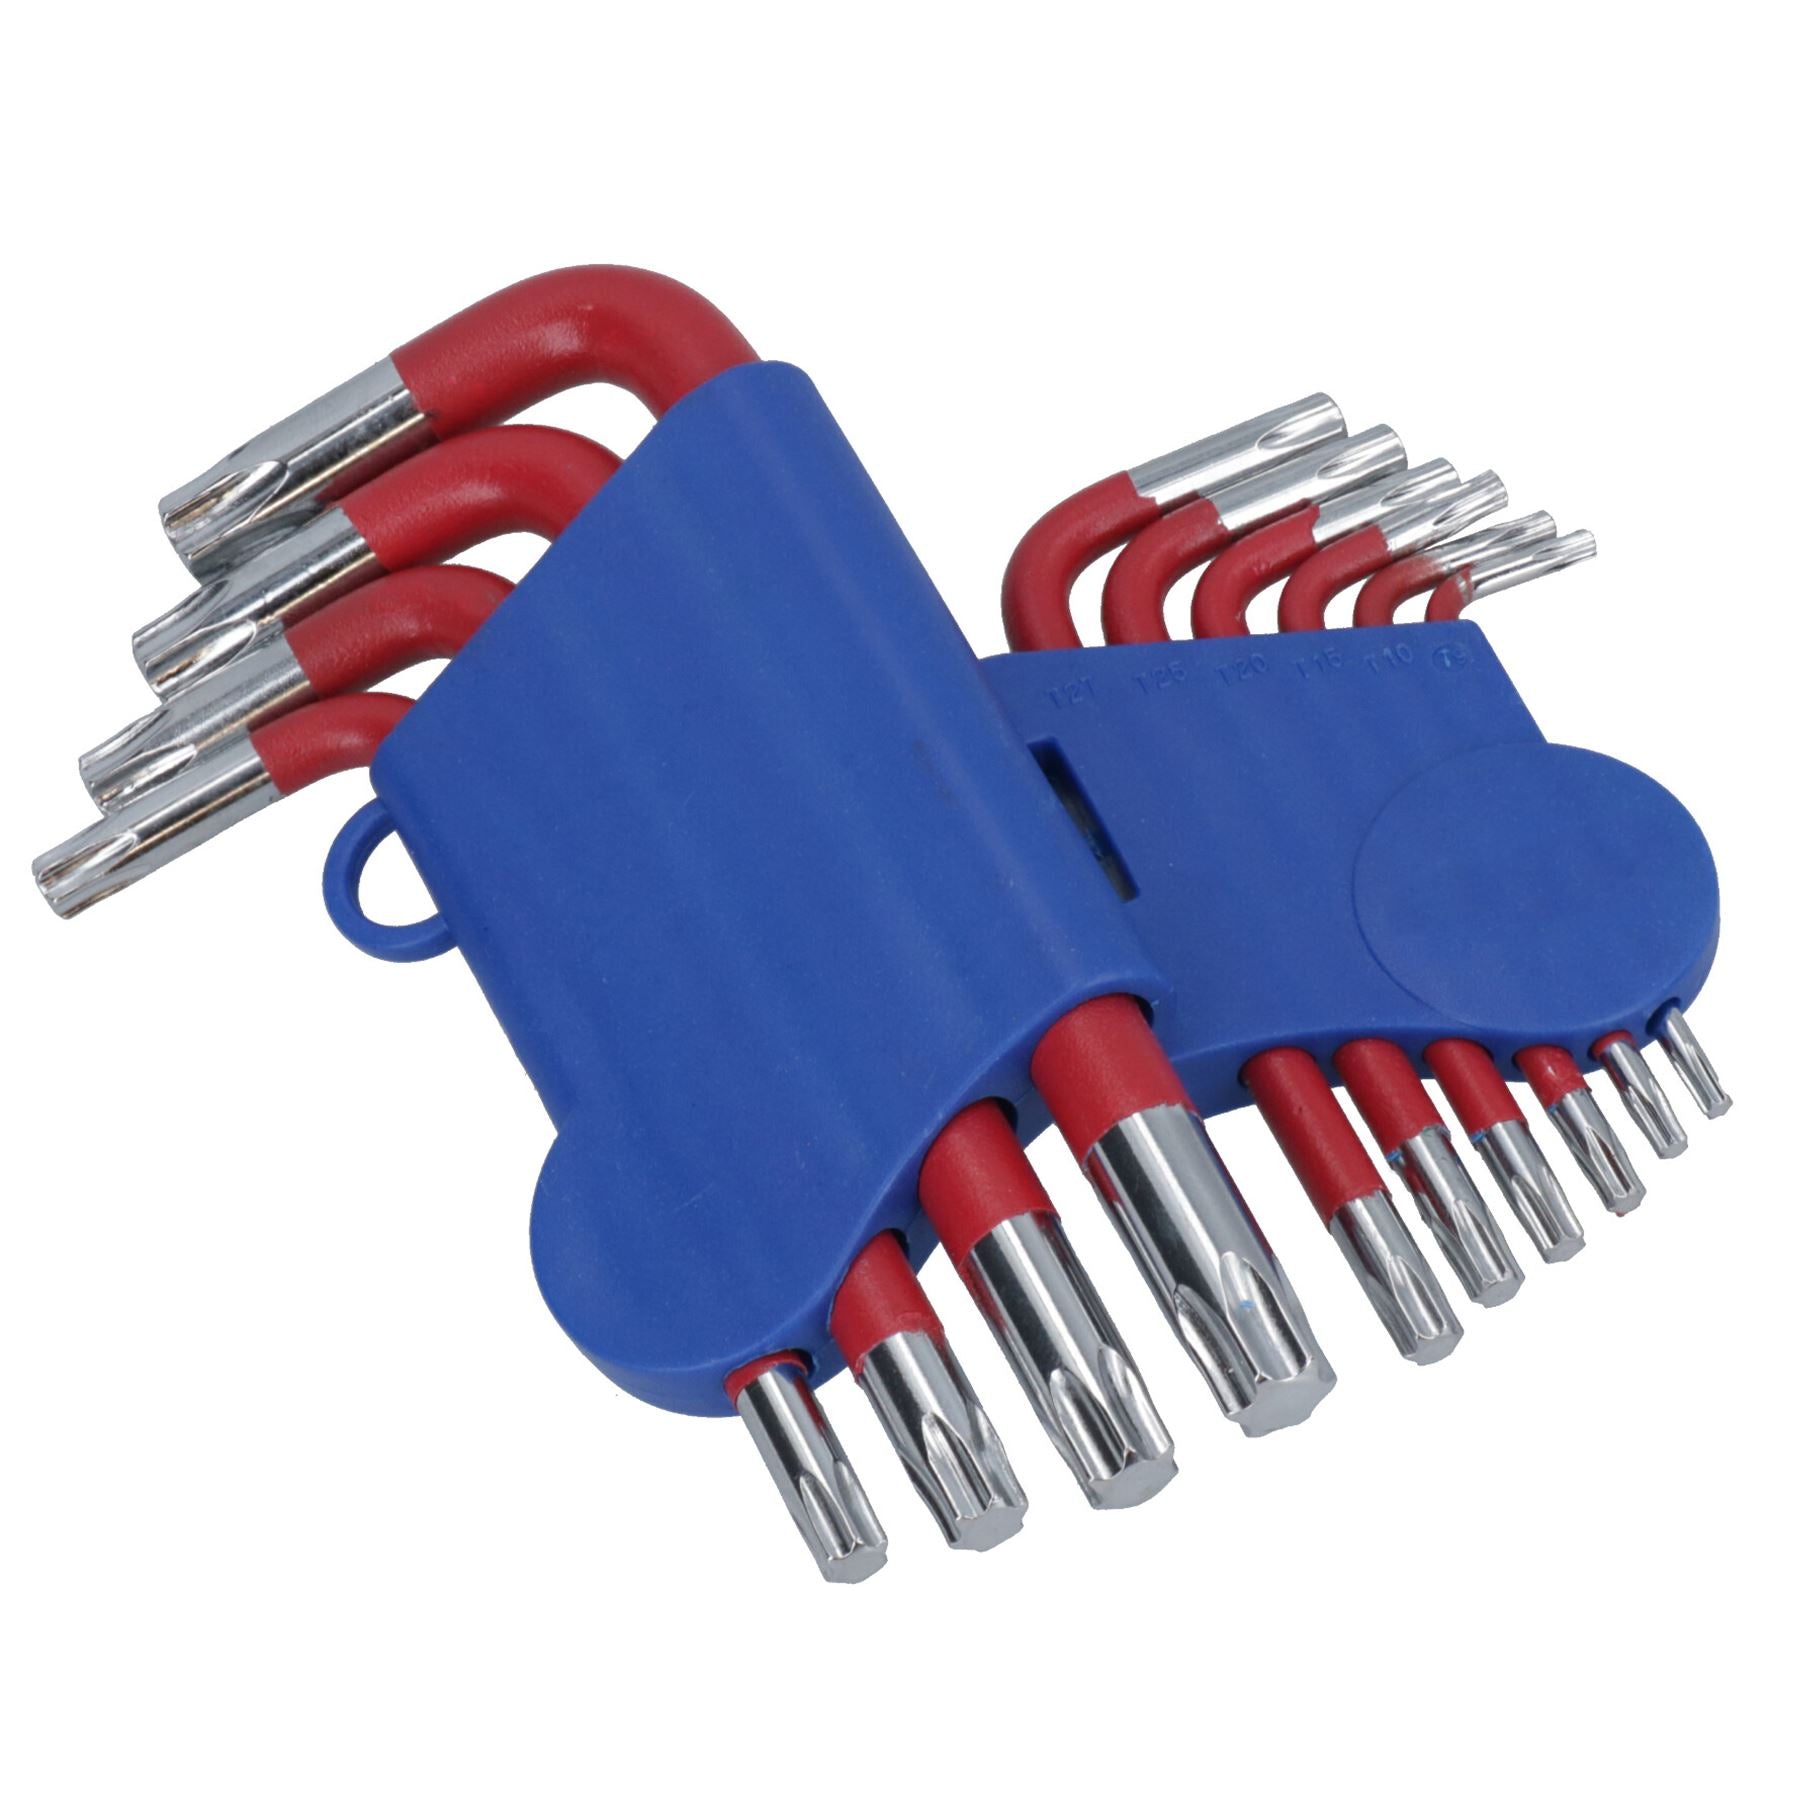 10pc Coloured Short Torx Star keys with Holder T9 – T50 Anti Slip Grip Covering